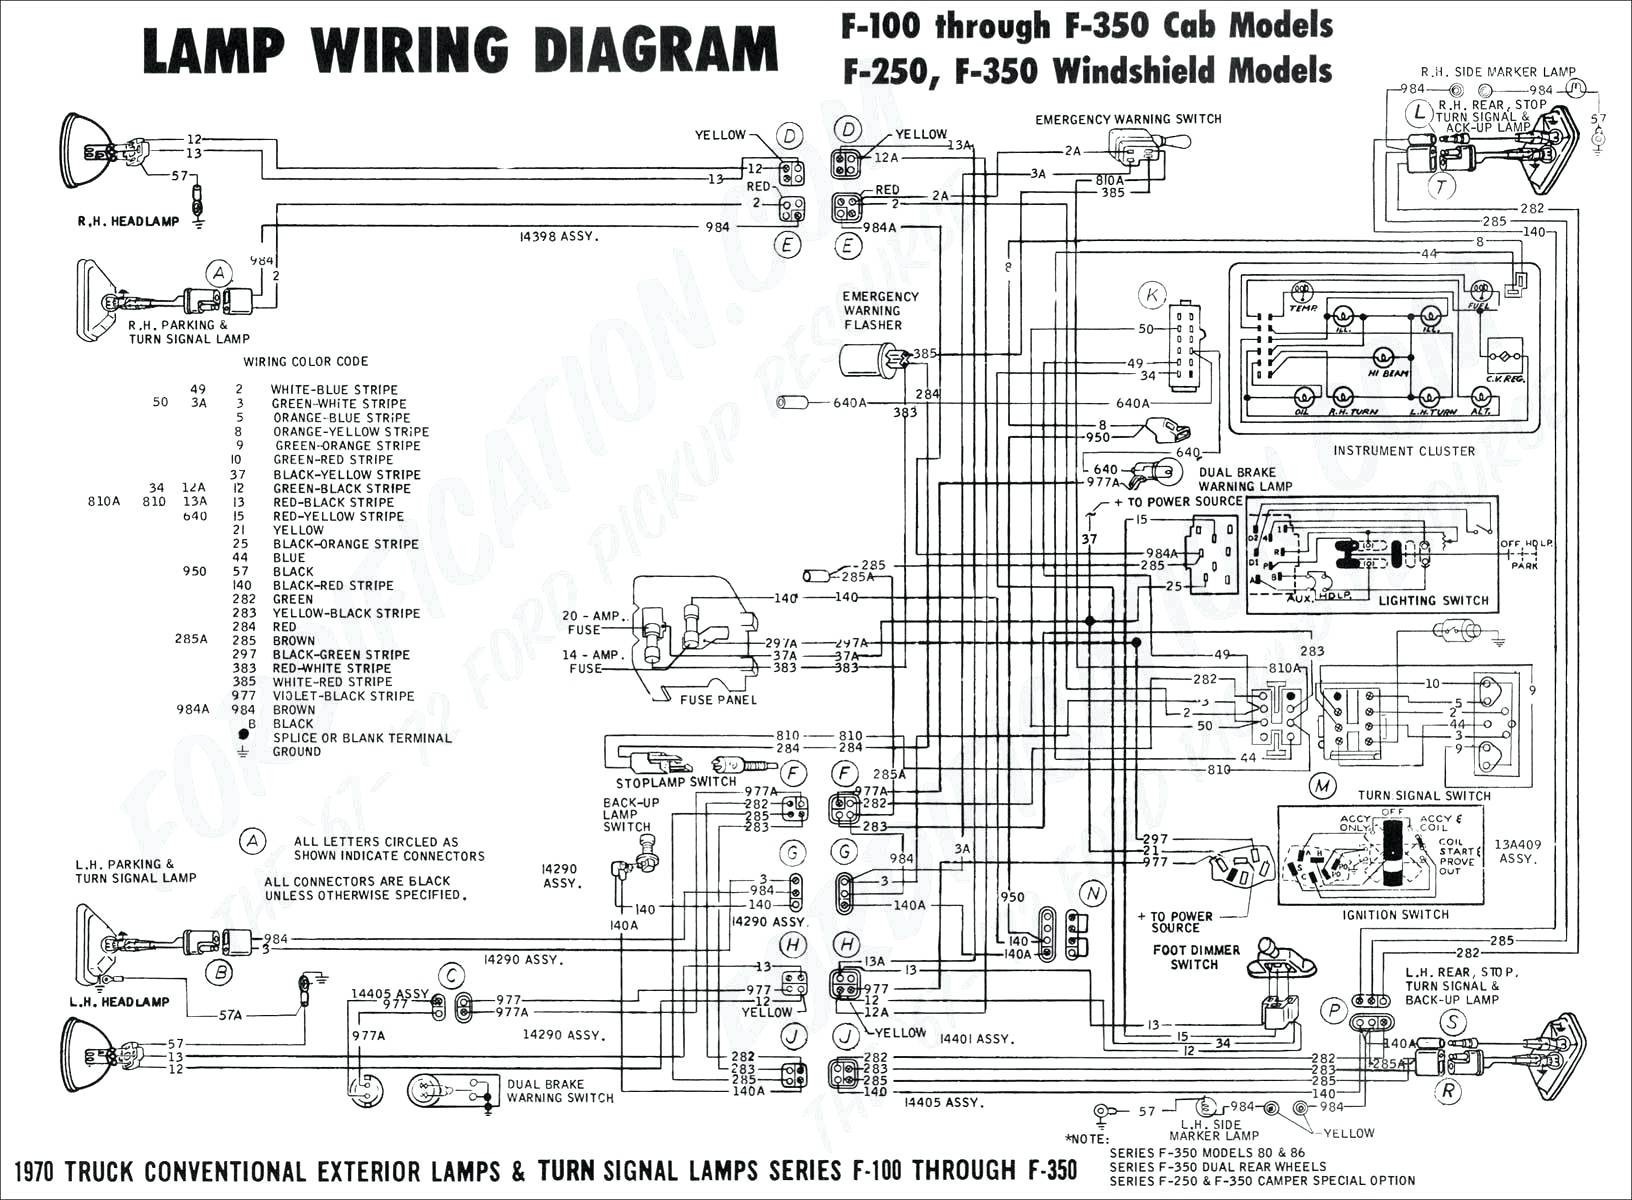 2005 Chevy Silverado Trailer Wiring Diagram ford Resize Gmc Ideas Chevy Silverado Trailer Wiring Diagram